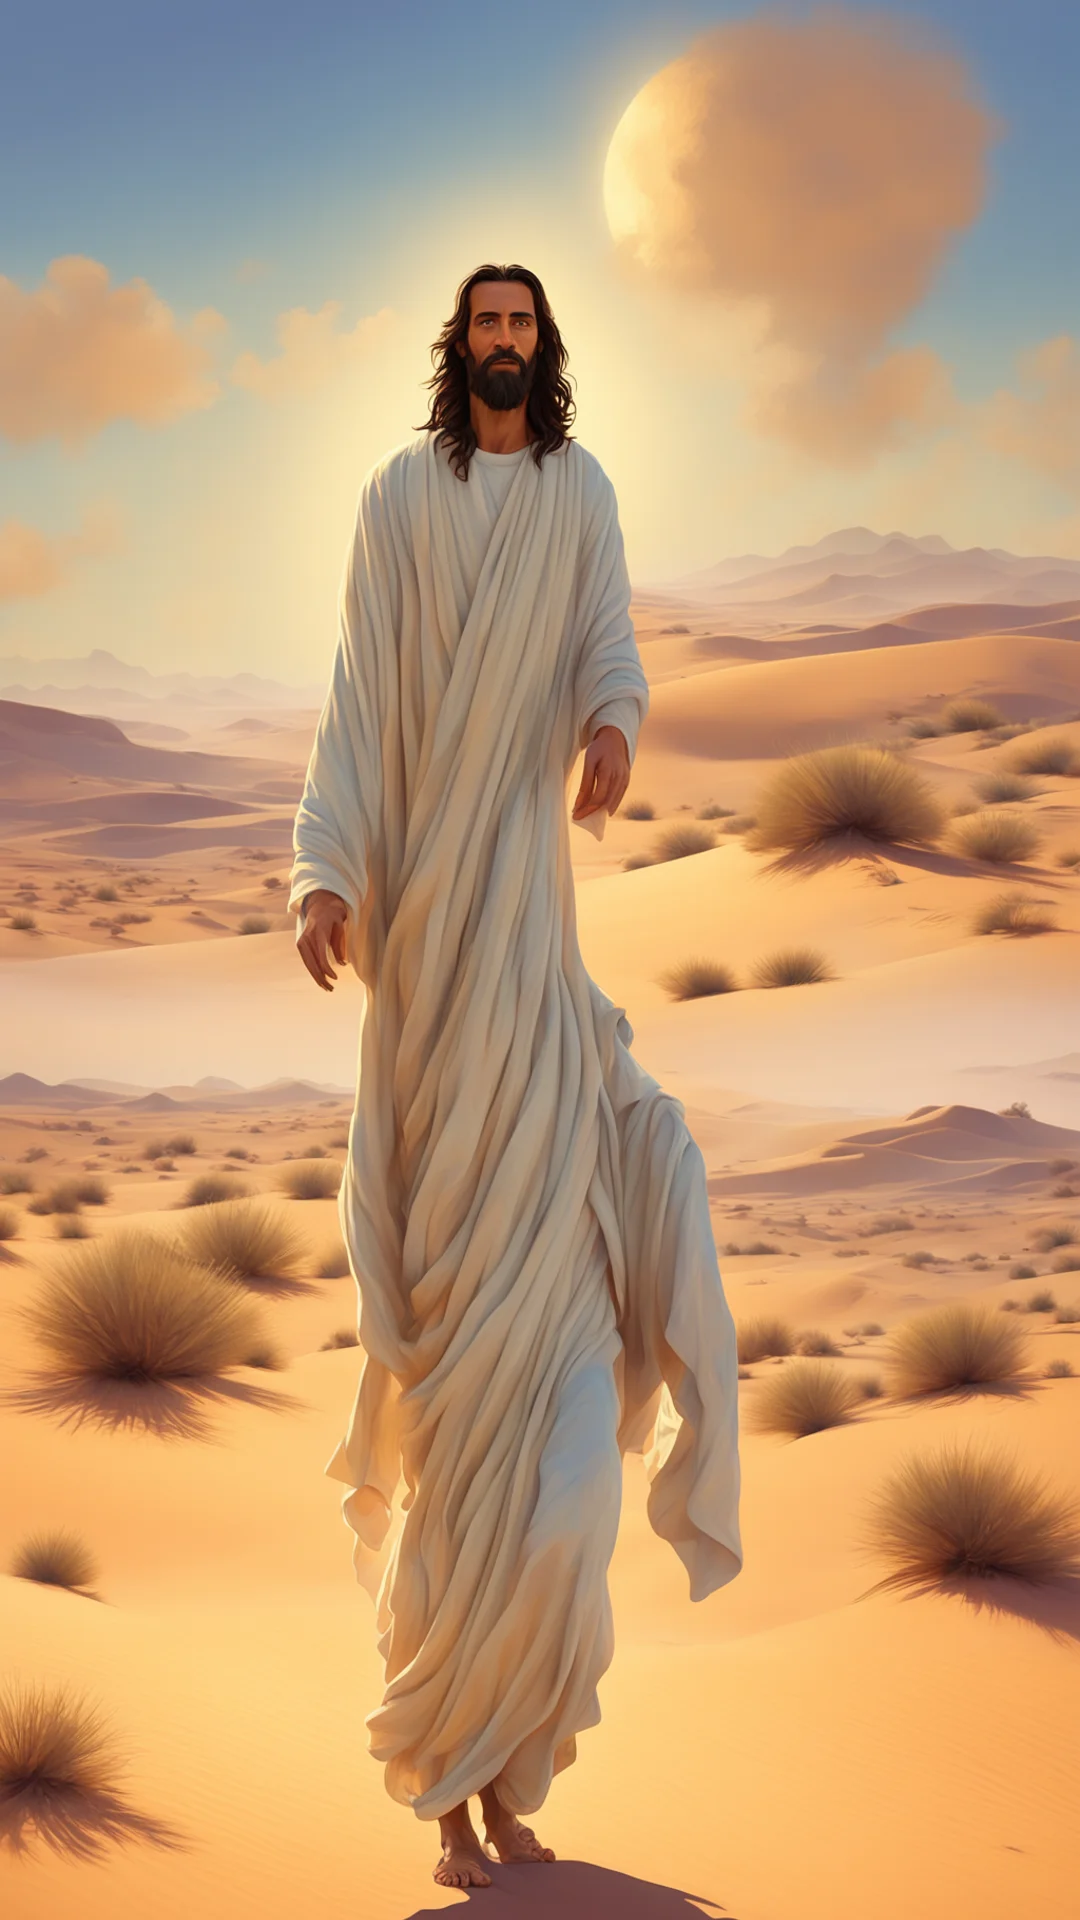 jesus walking in style of oil painting  octane  desert in style of pixar ar 916 stop 80 uplight good looking trending fantastic 1 tall